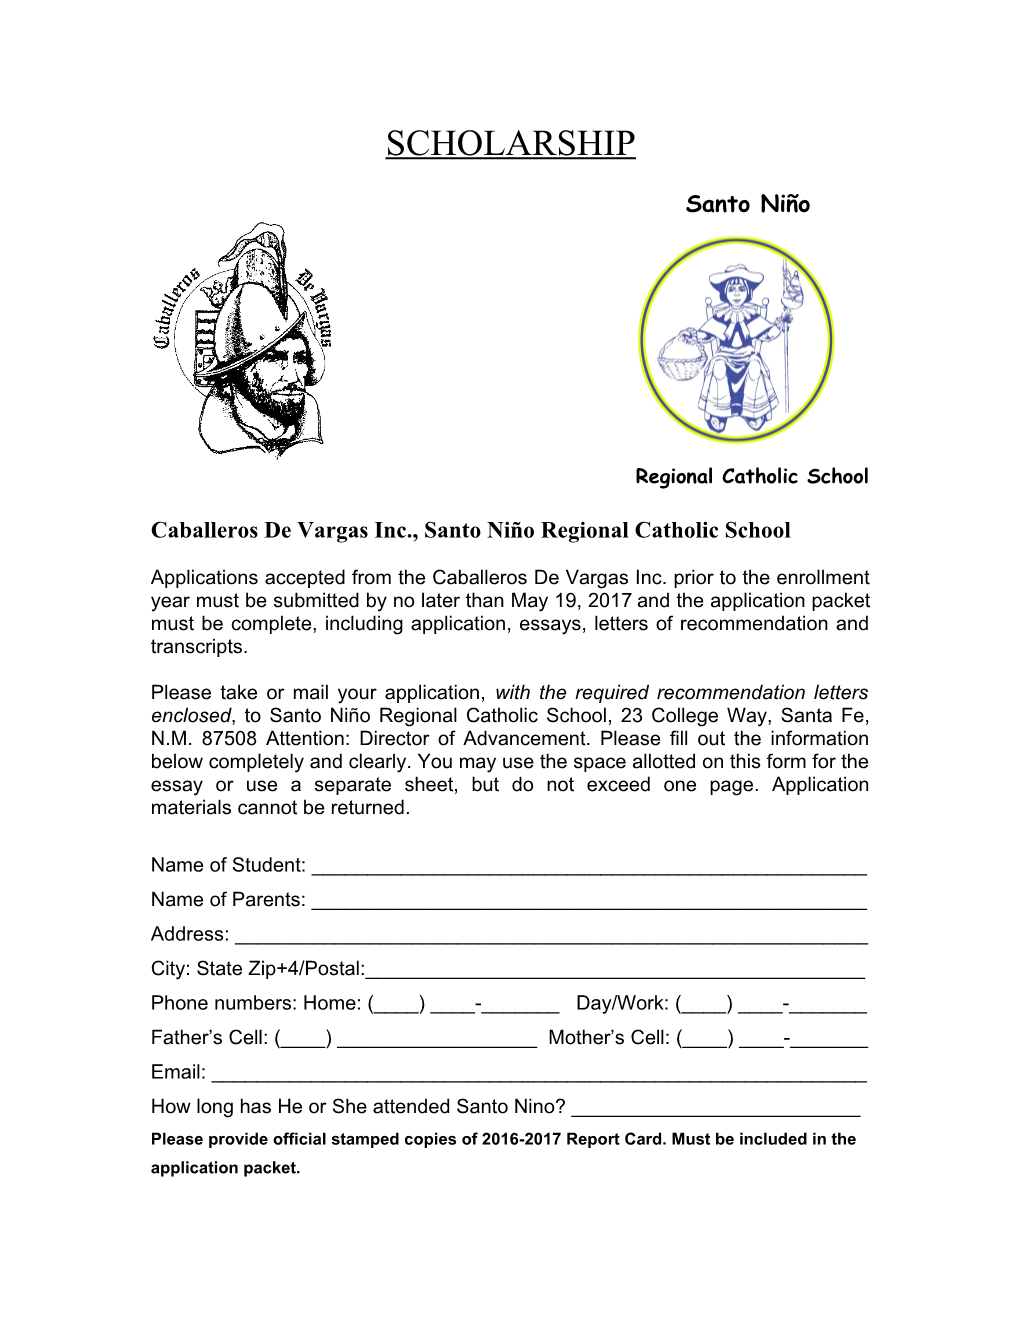 Caballeros De Vargas Santo Nino Regional Catholic School Scholarship, Page 1